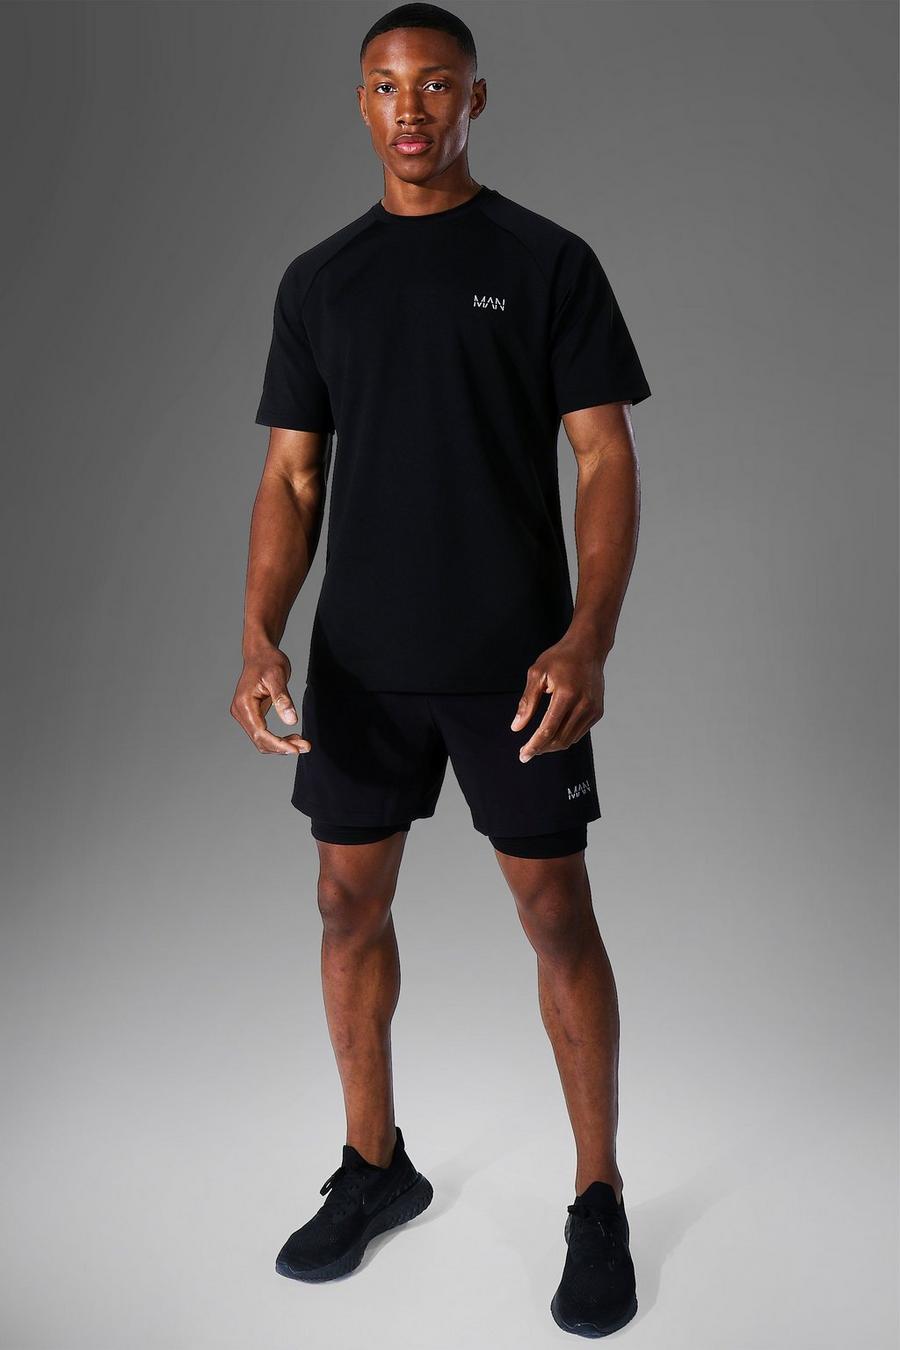 Man Active Gym T-Shirt & 2-In-1 Short Set | Boohoo UK